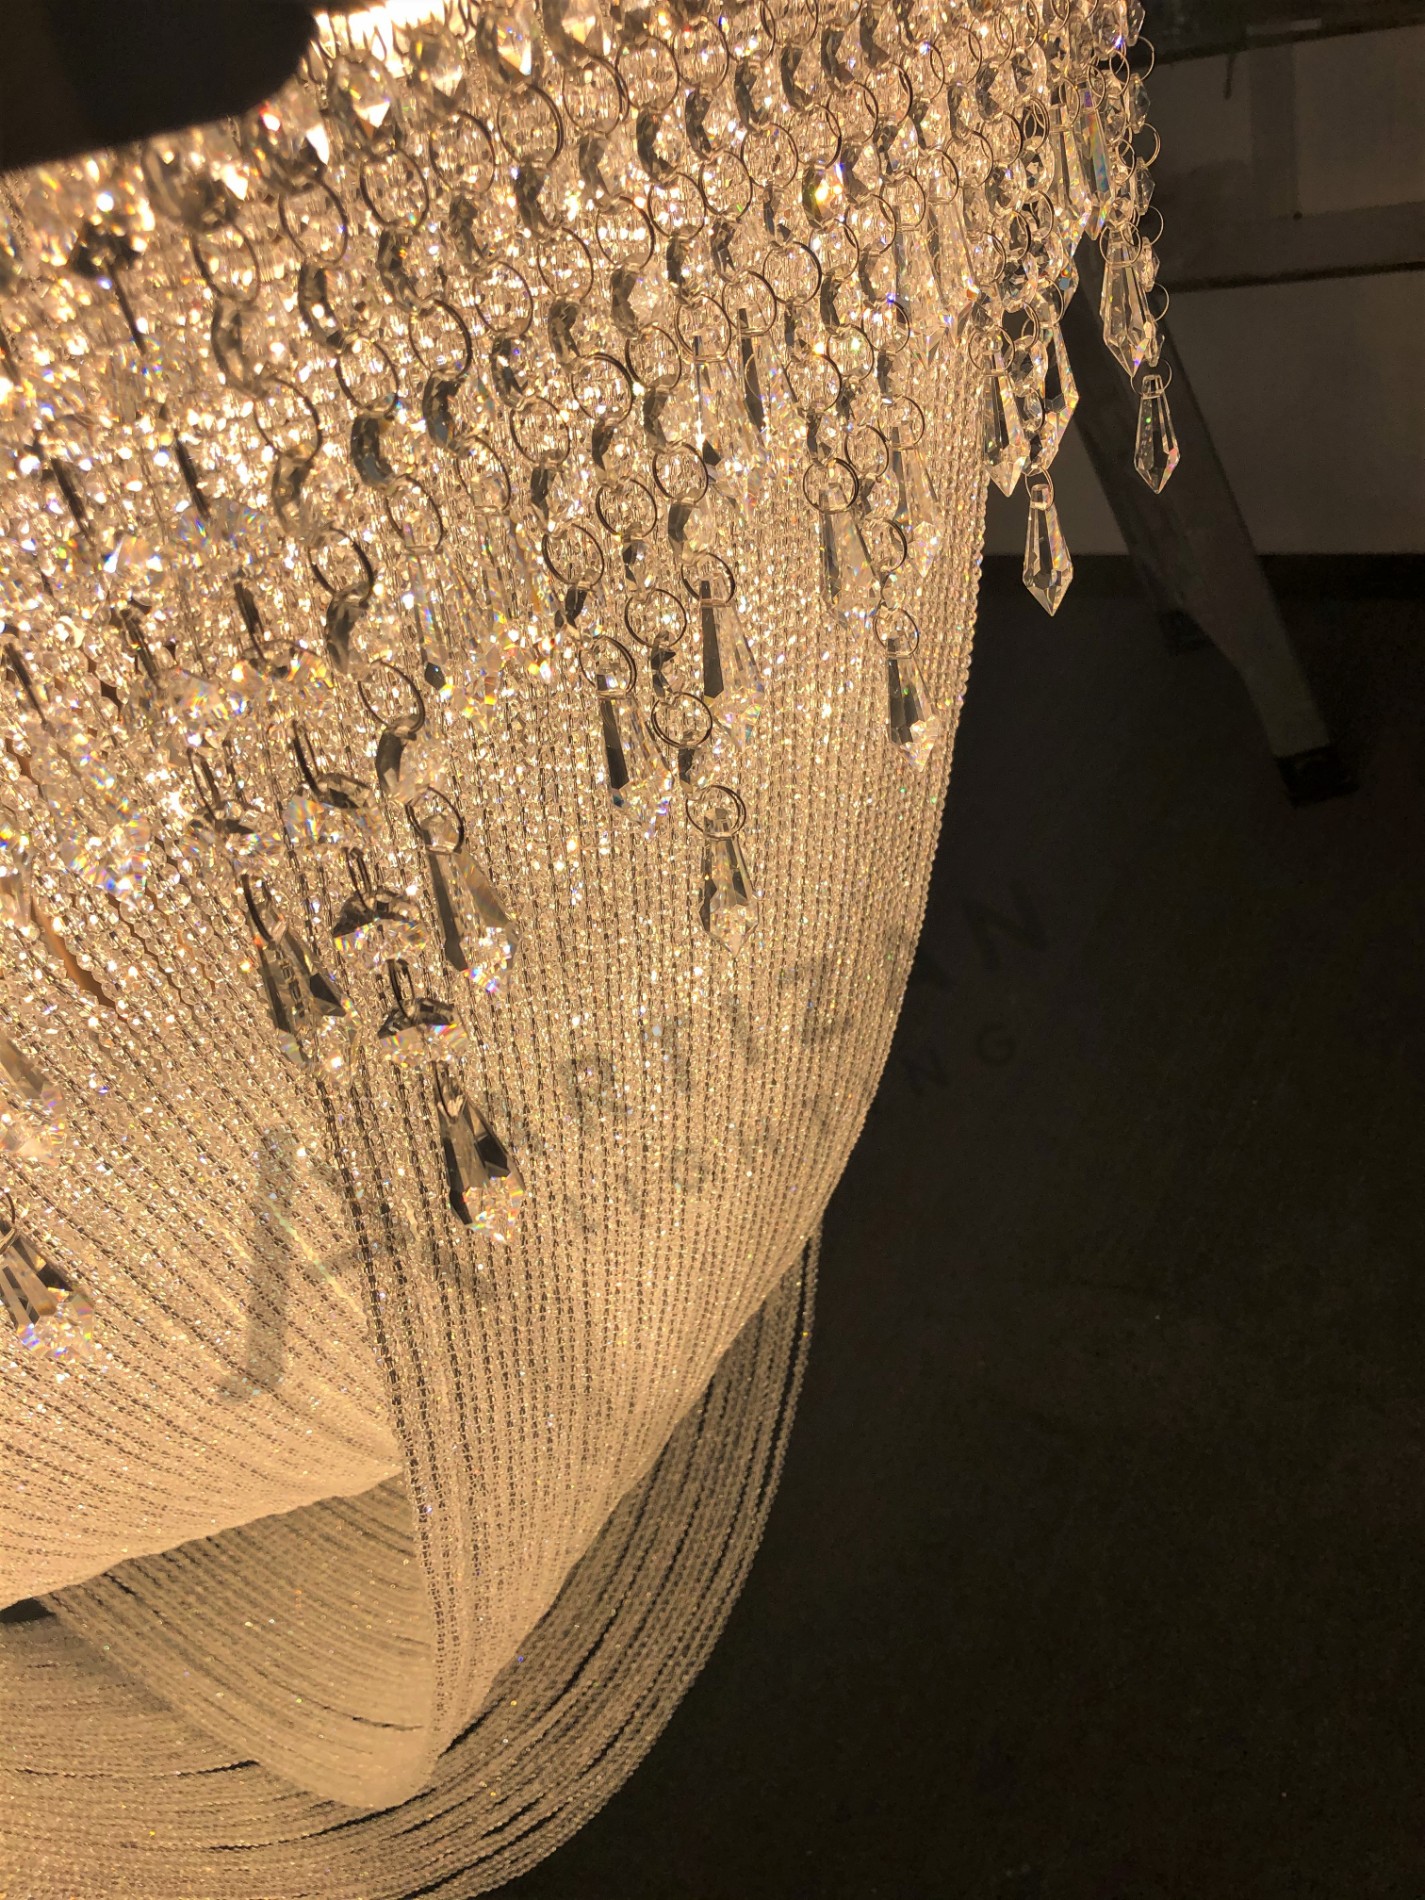 Crystal blanket custom chandeliers decorative lighting